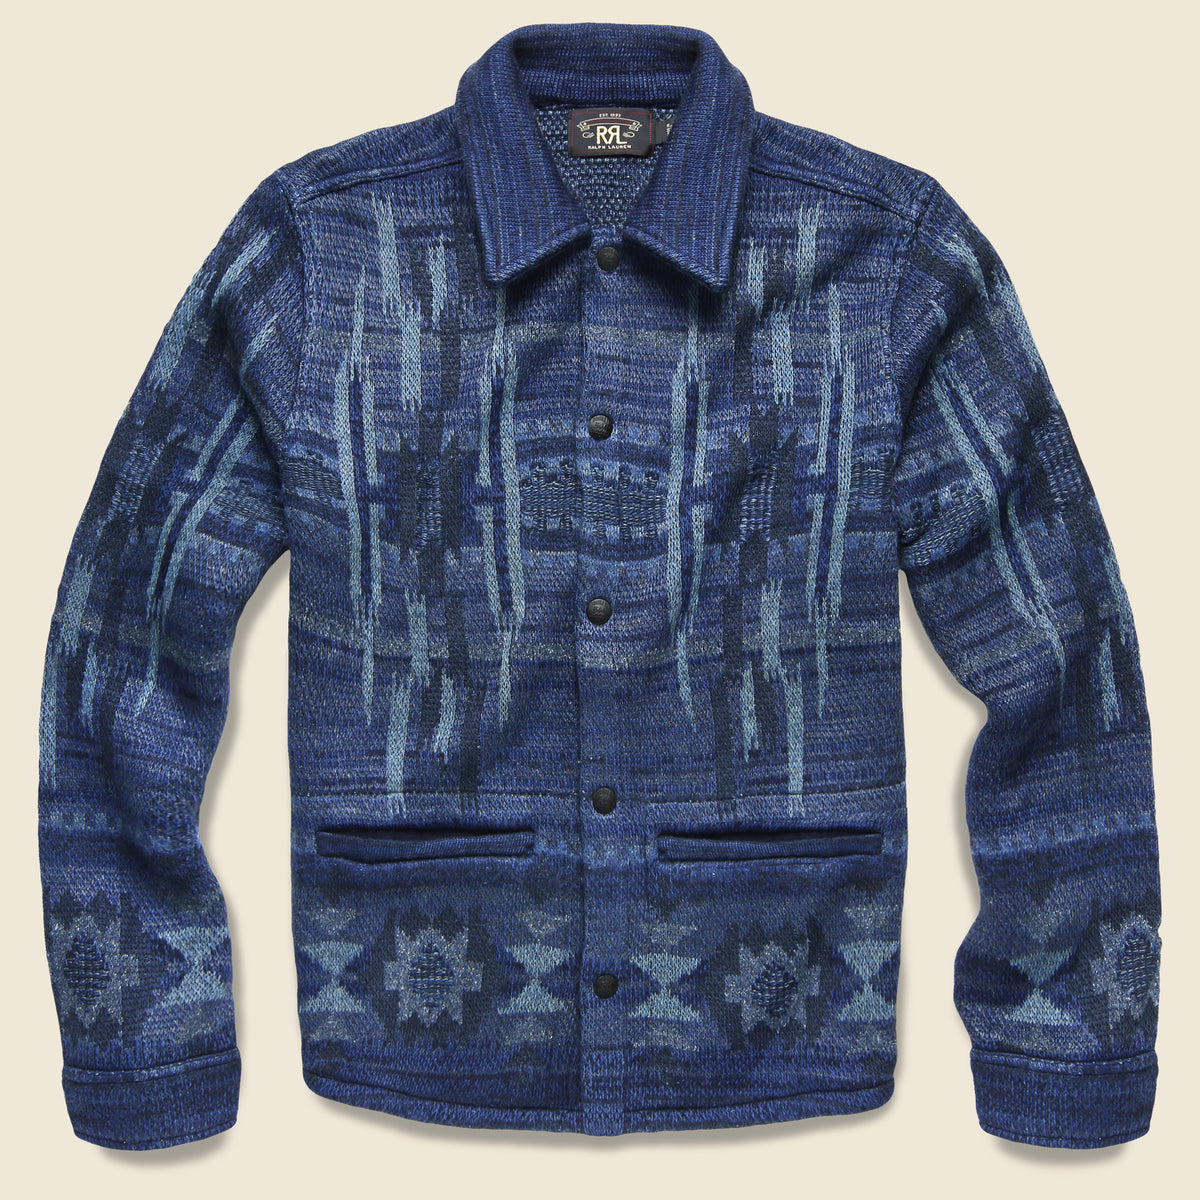 Chimayo Birdseye Jacquard Workshirt Sweater - Indigo